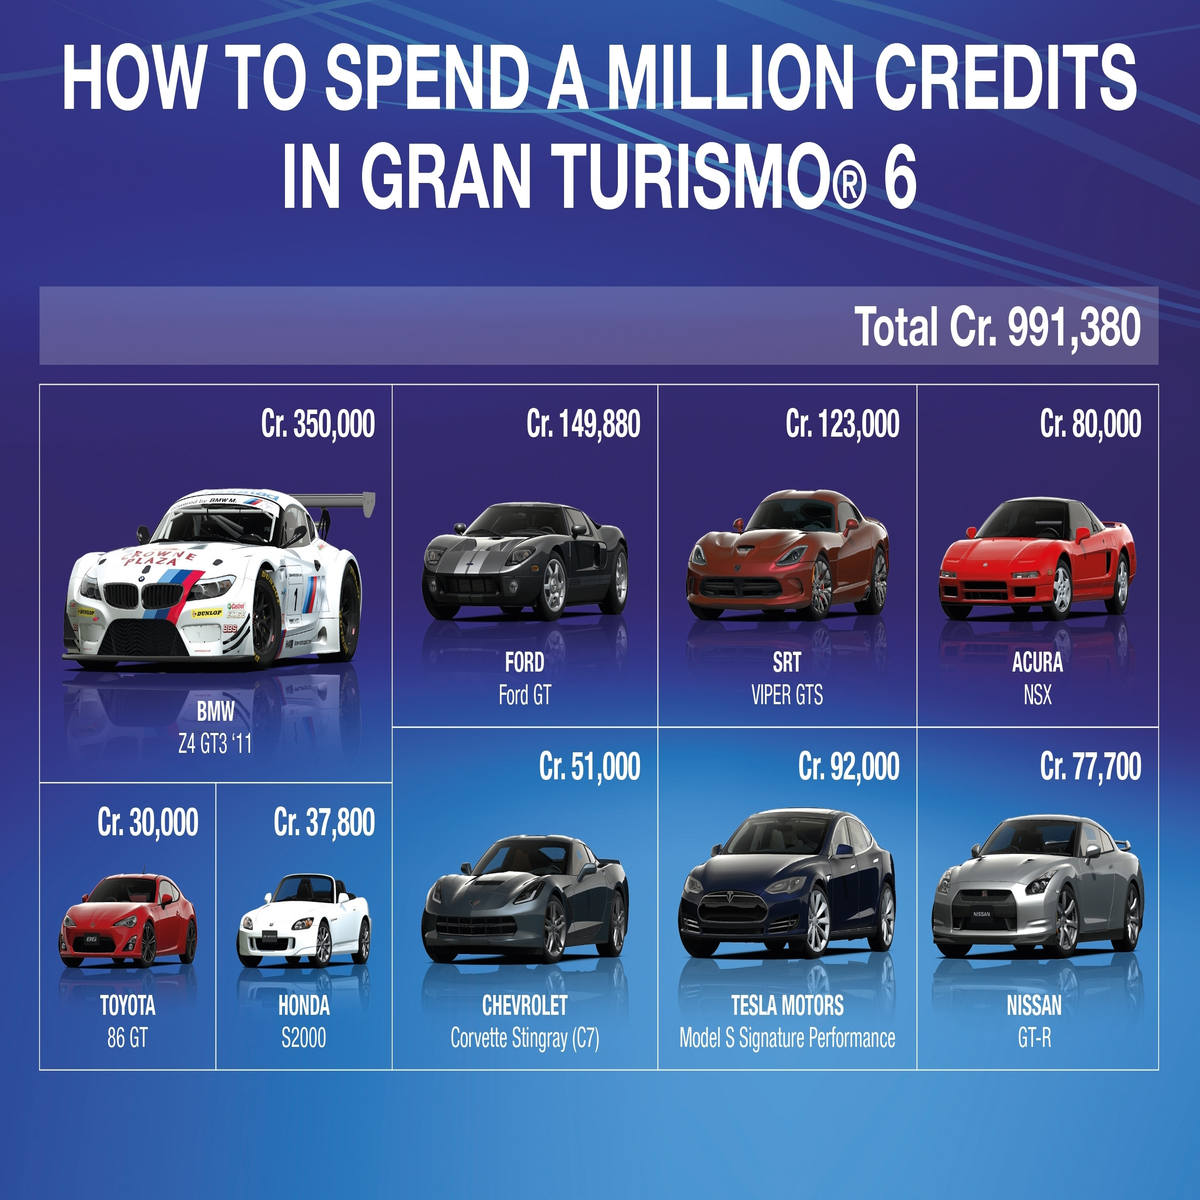 Yes, Gran Turismo 6 has micro-transactions